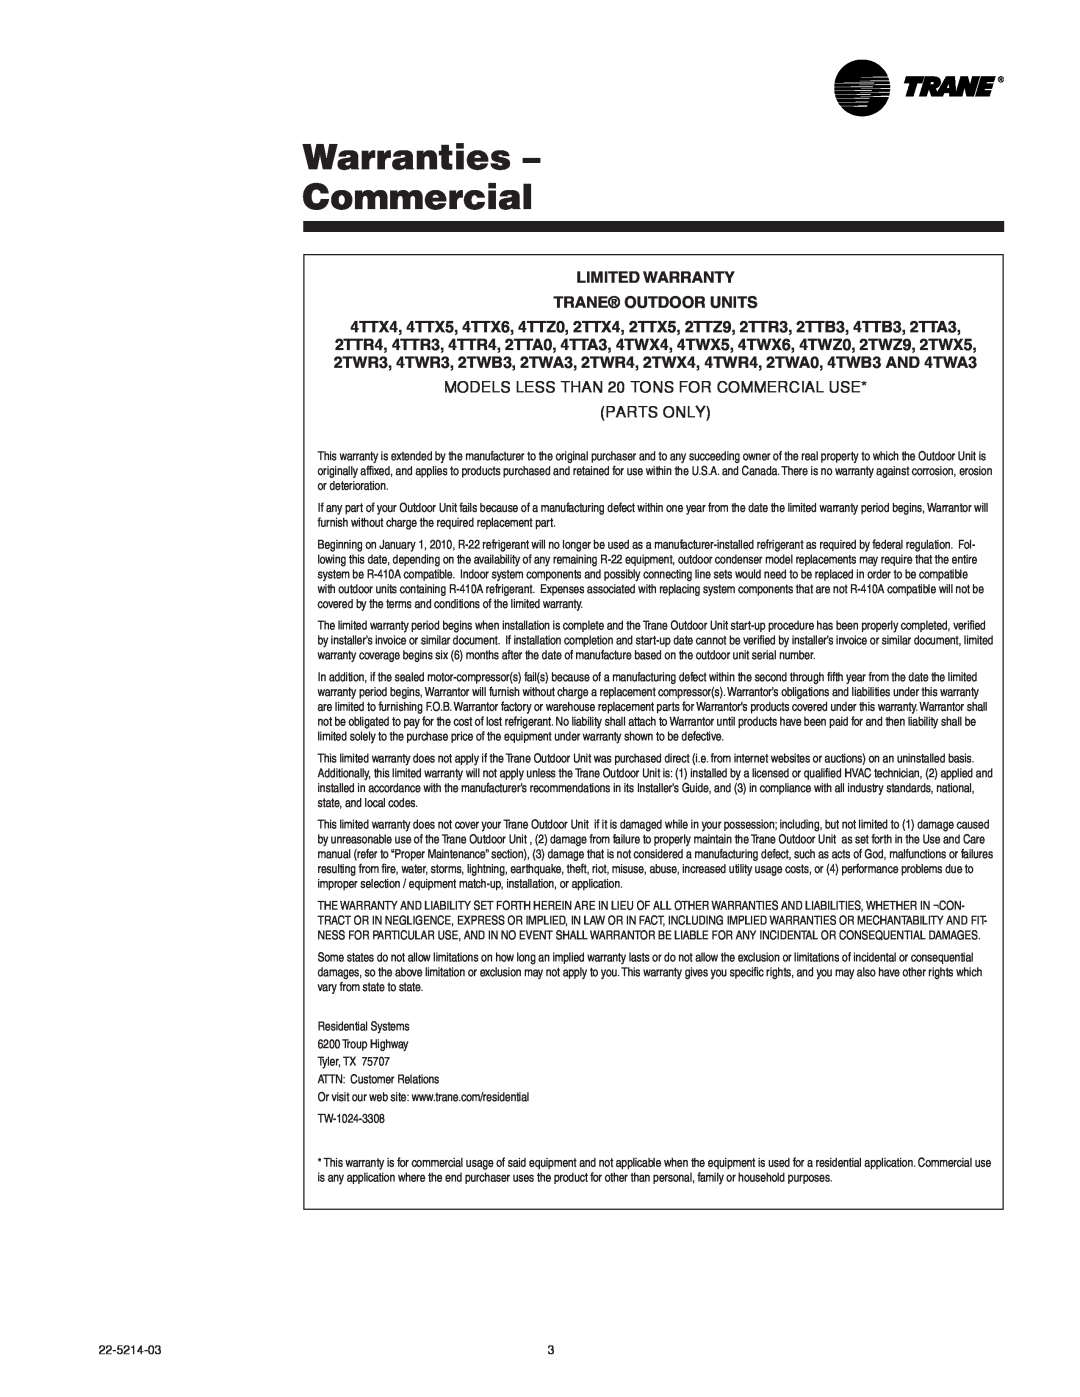 Trane 22-5214-03 manual Warranties - Commercial, Limited Warranty Trane Outdoor Units 